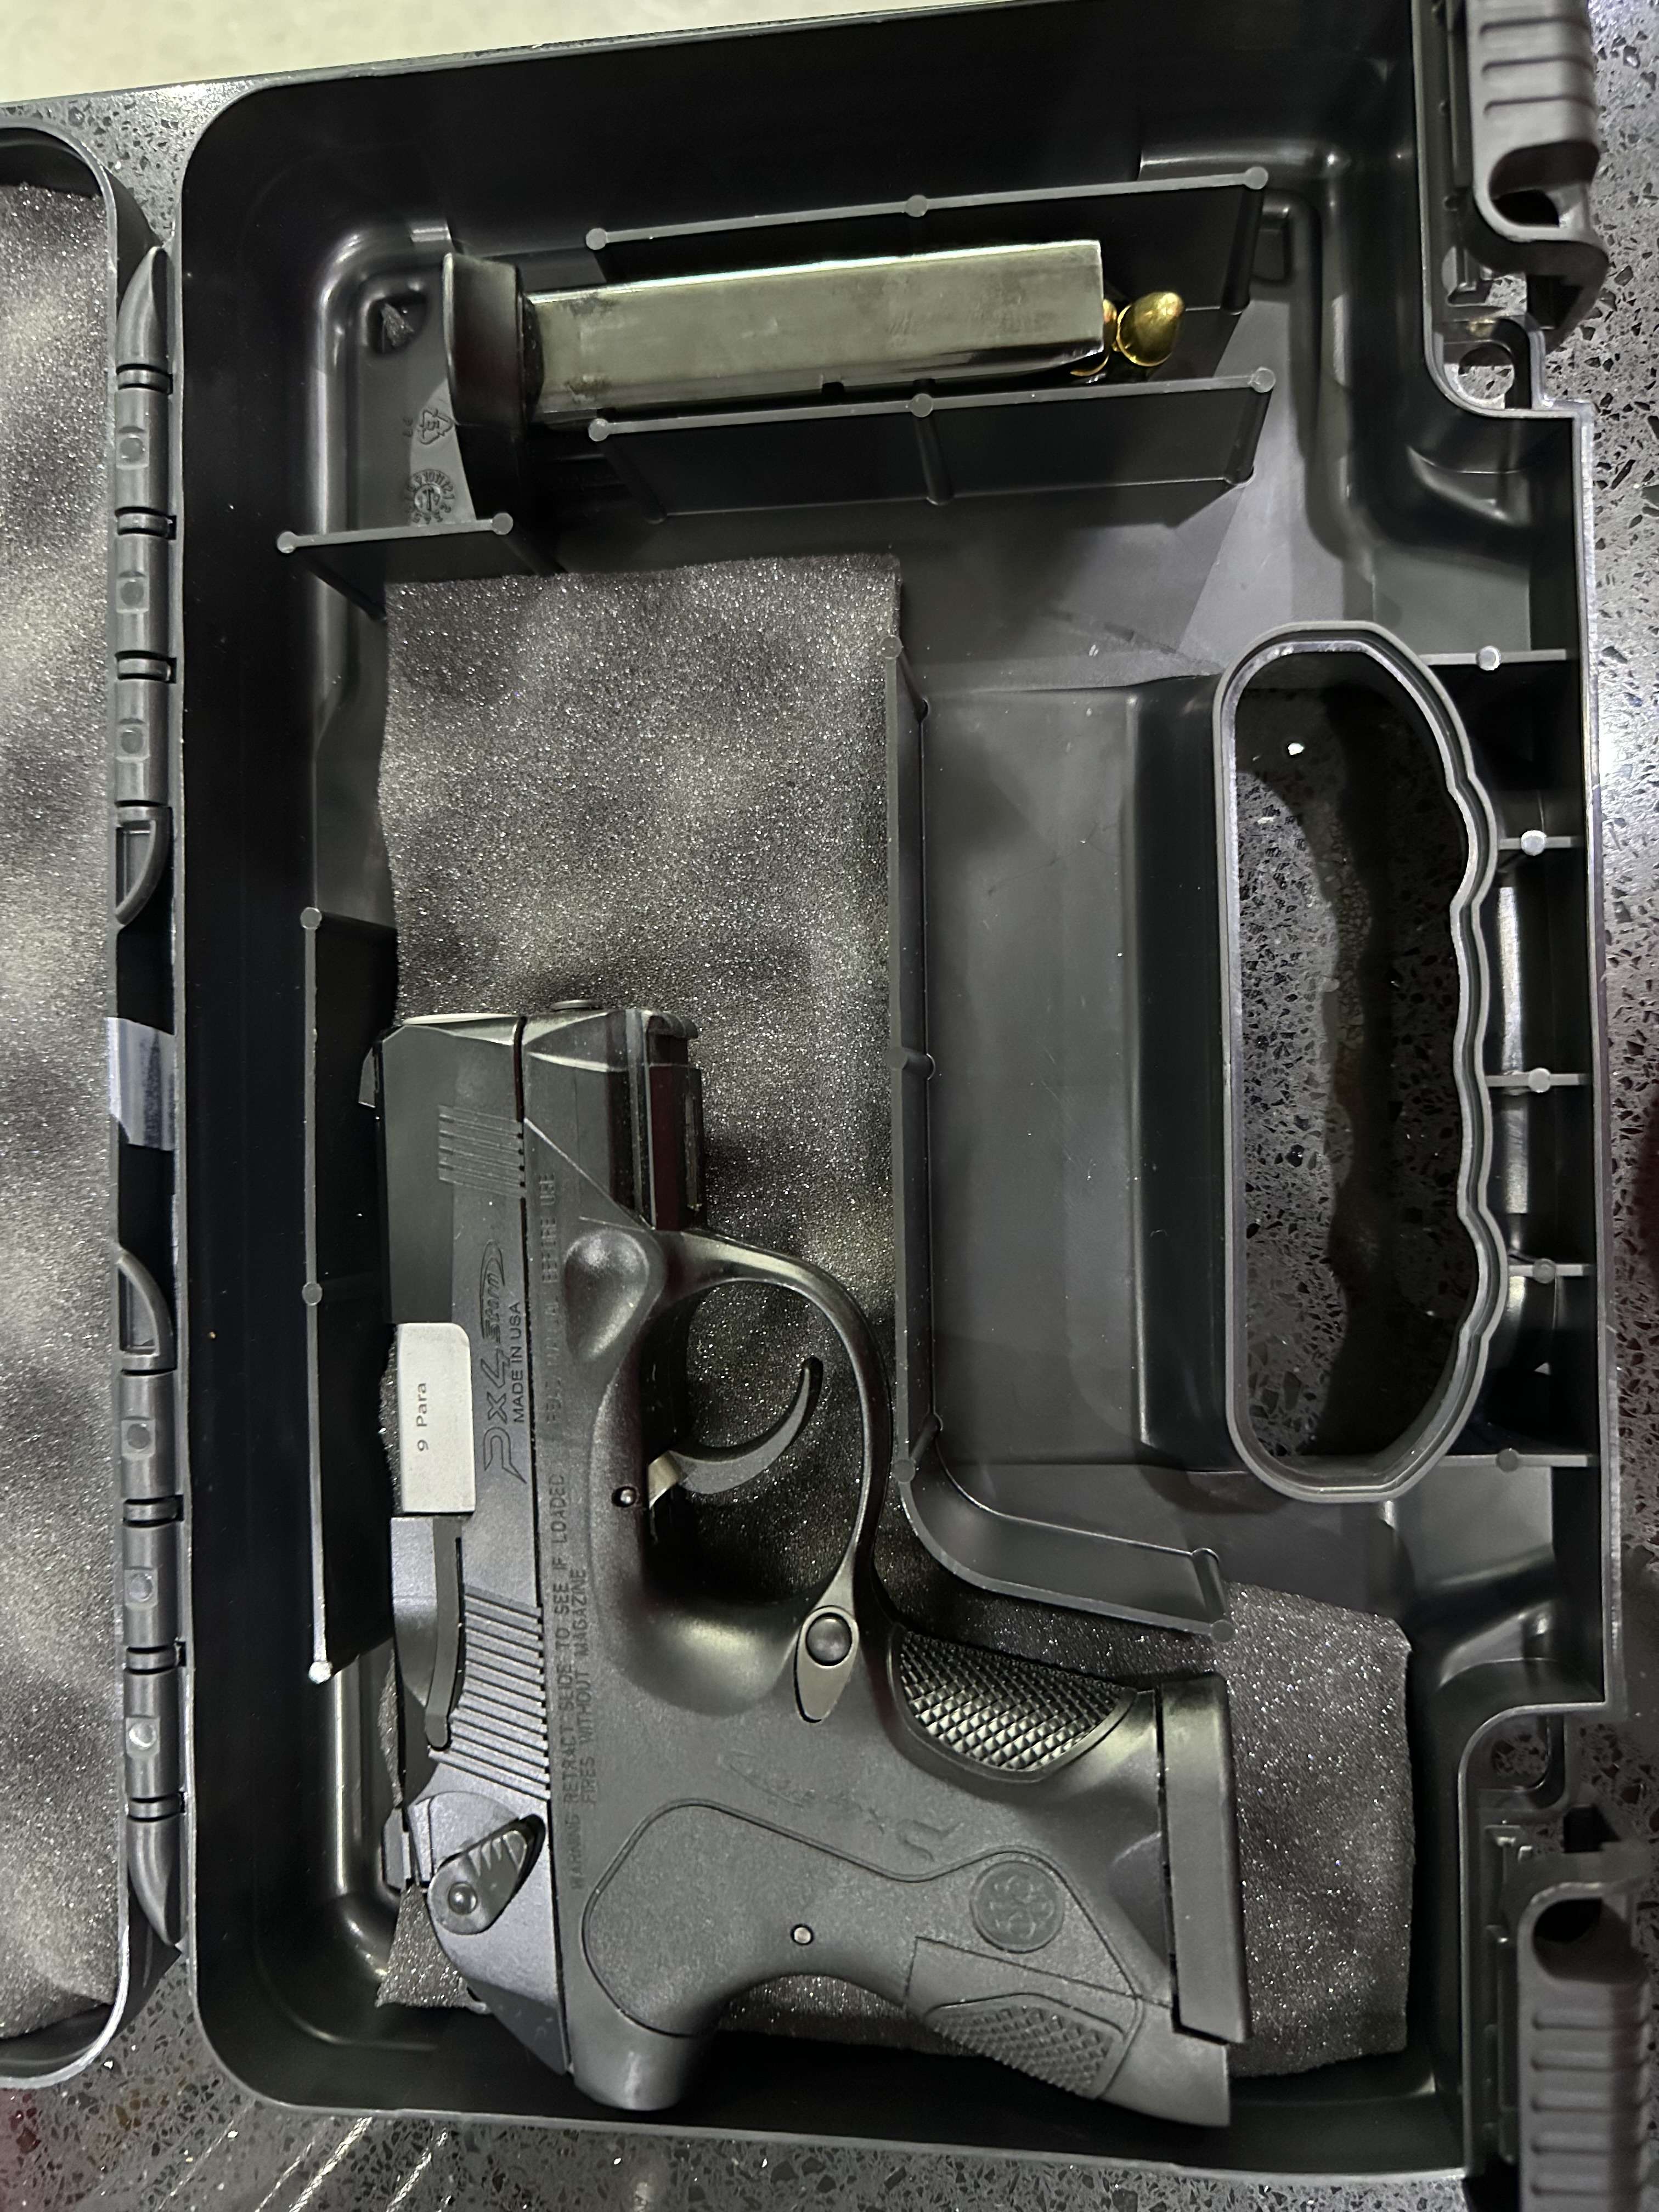 Beretta PX 4 Storm Compact 9mm, Armas de fuego en PR